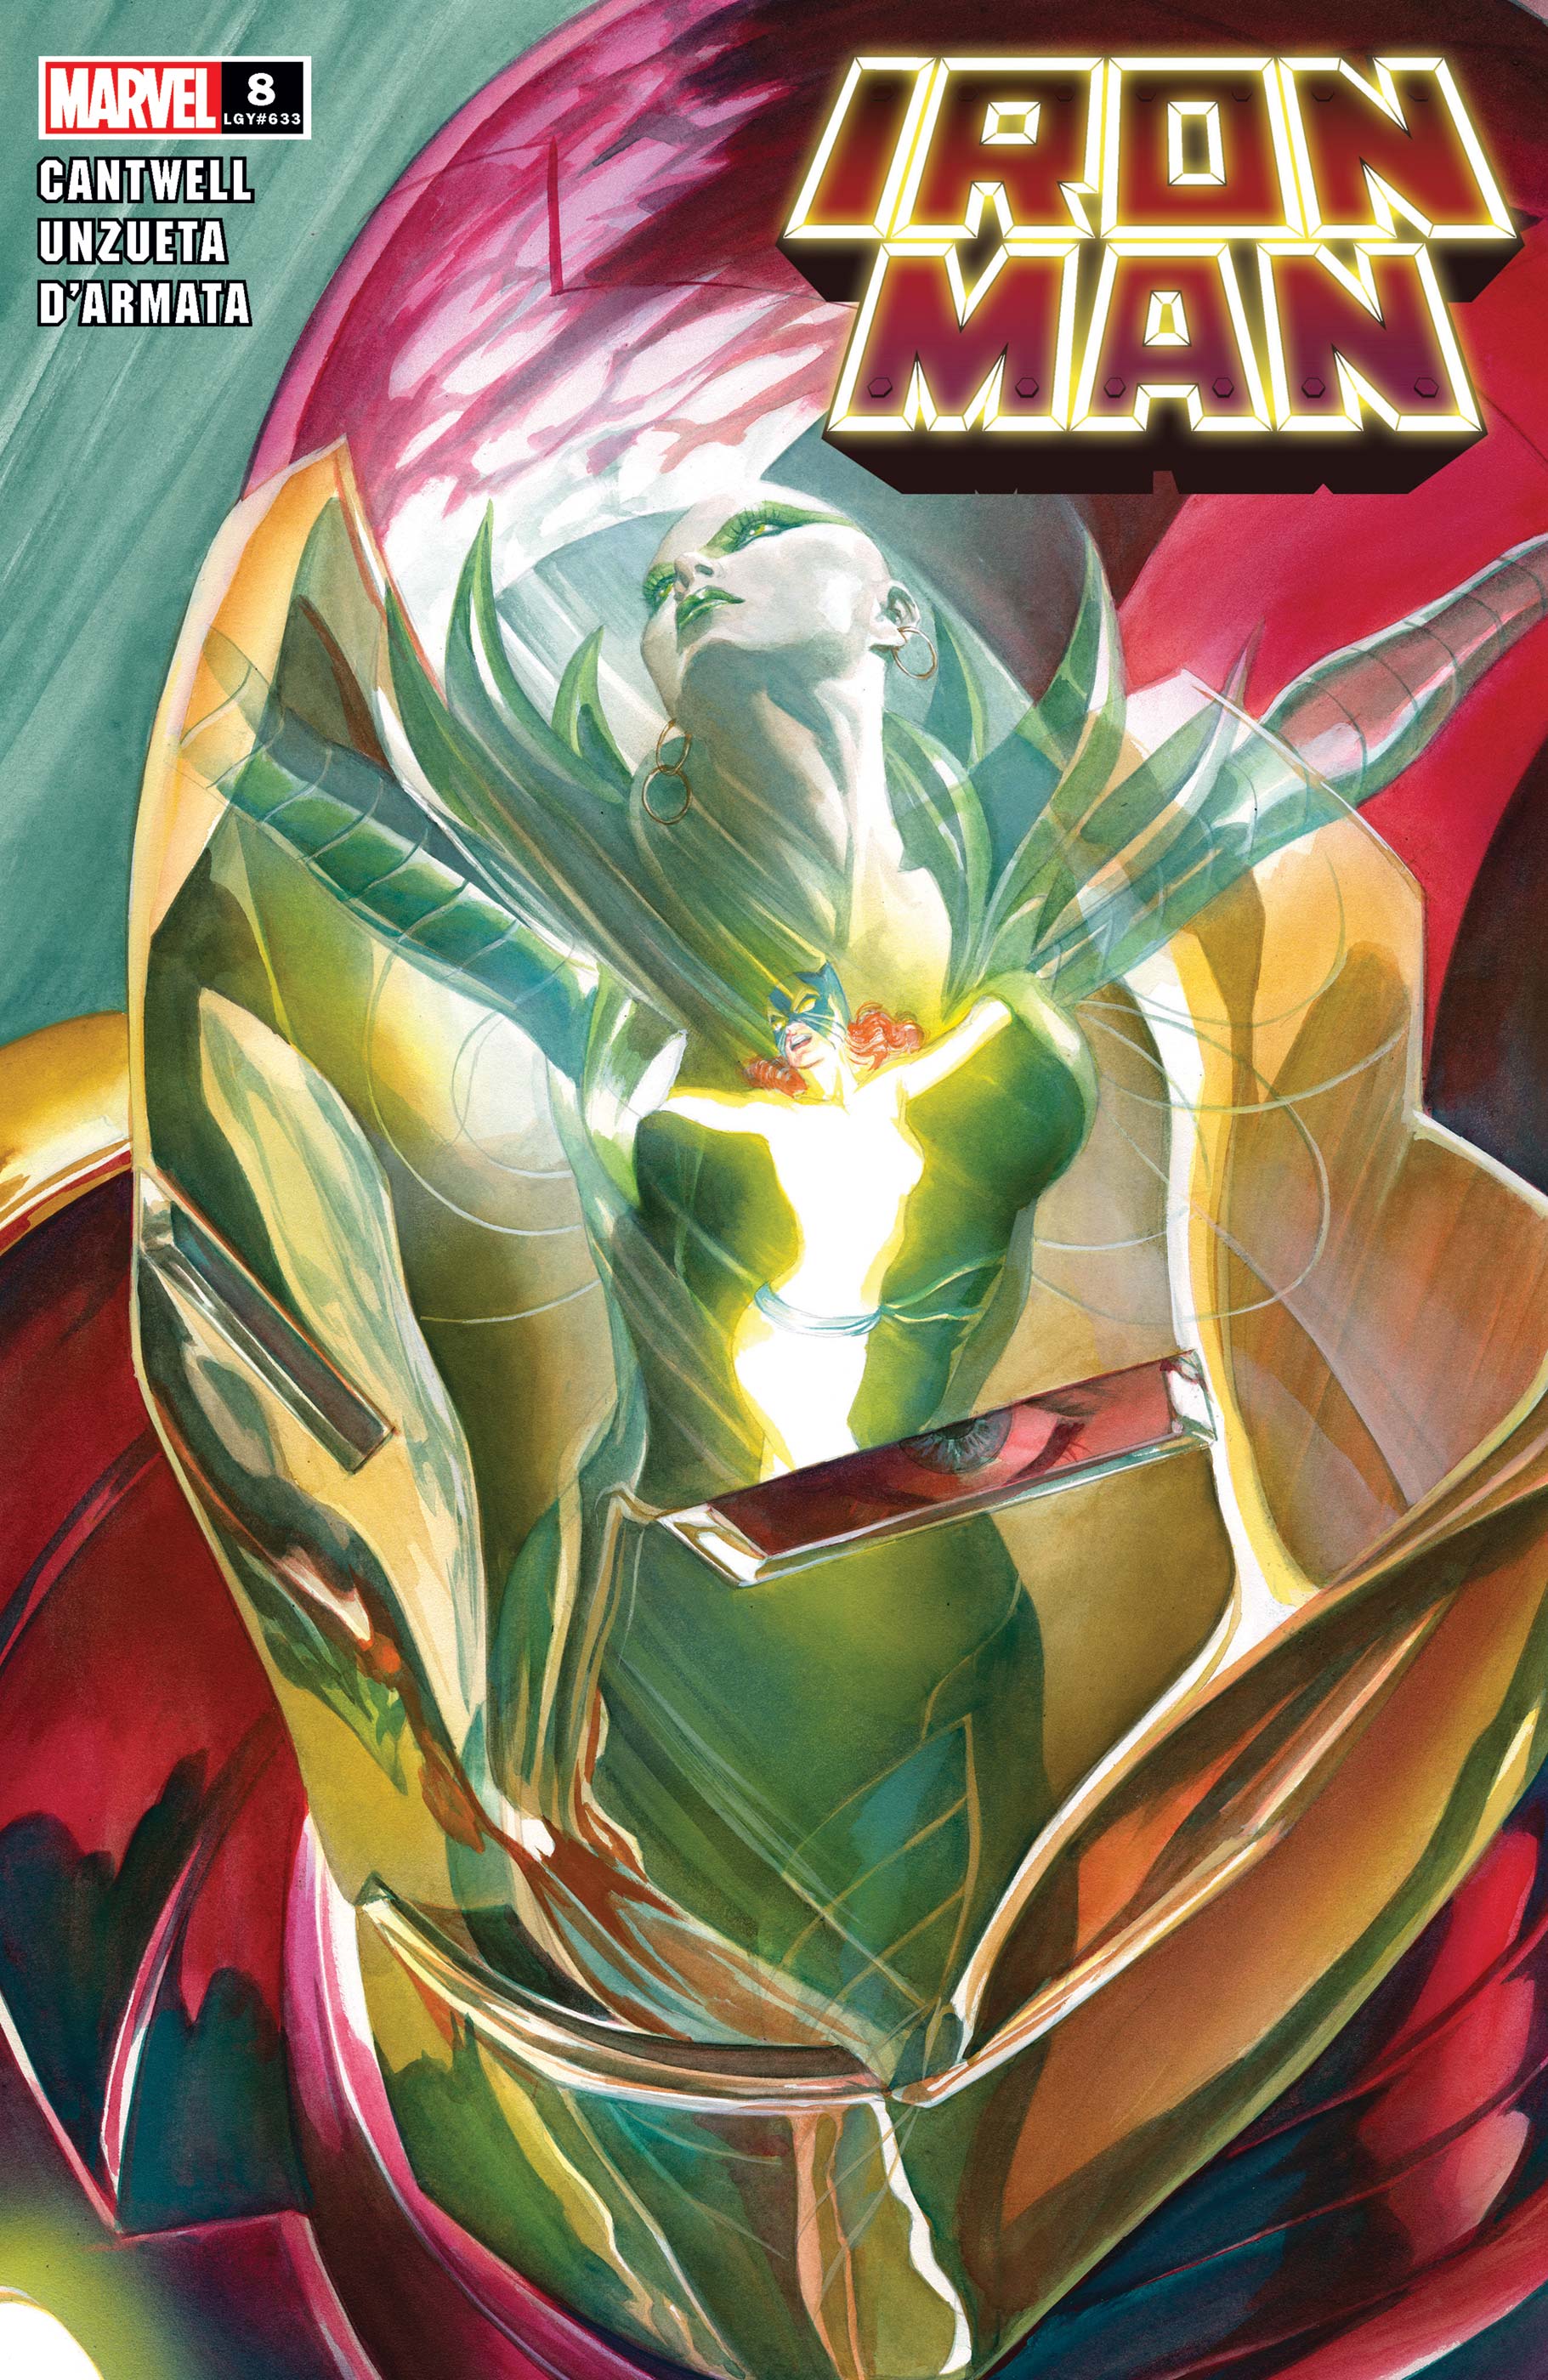 Iron Man (2020) #8